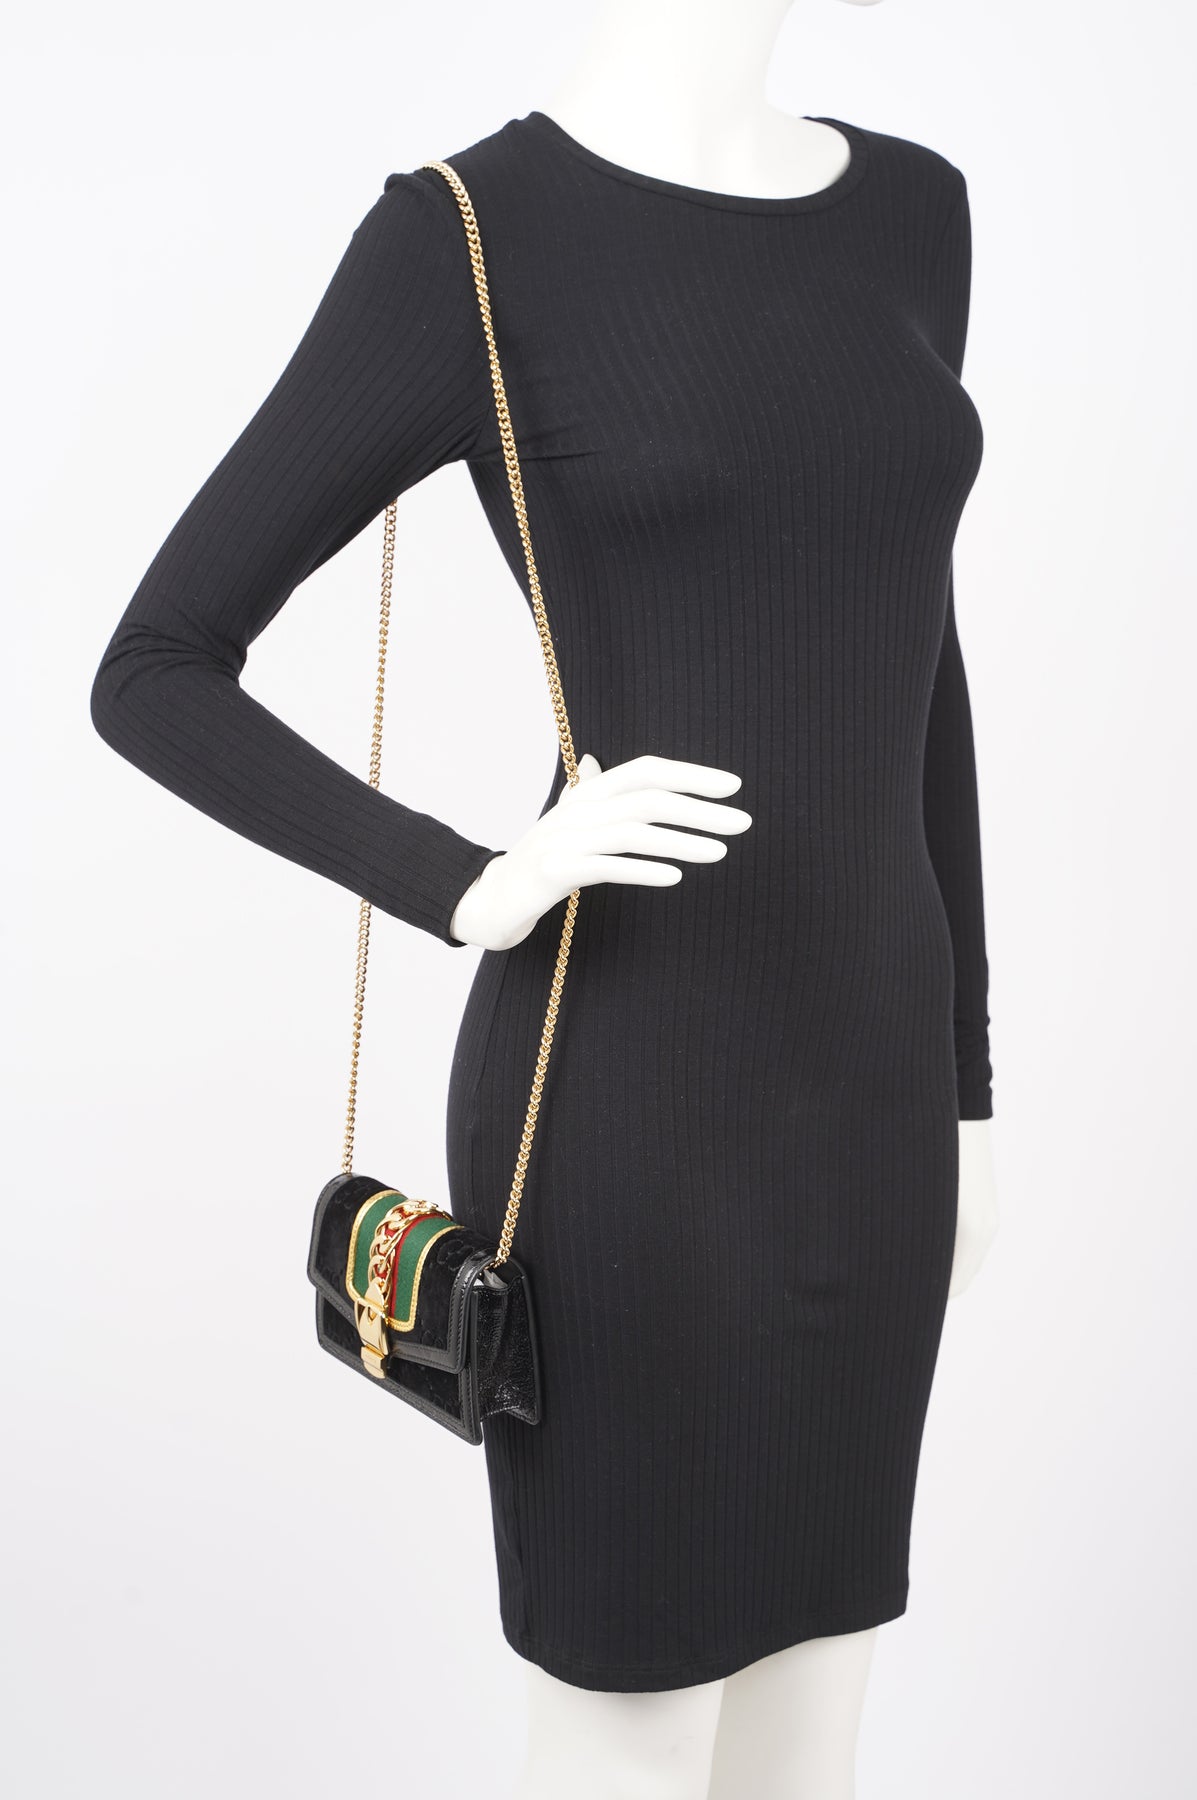 Gucci Calfskin Super Mini Sylvie Chain Shoulder Bag Black